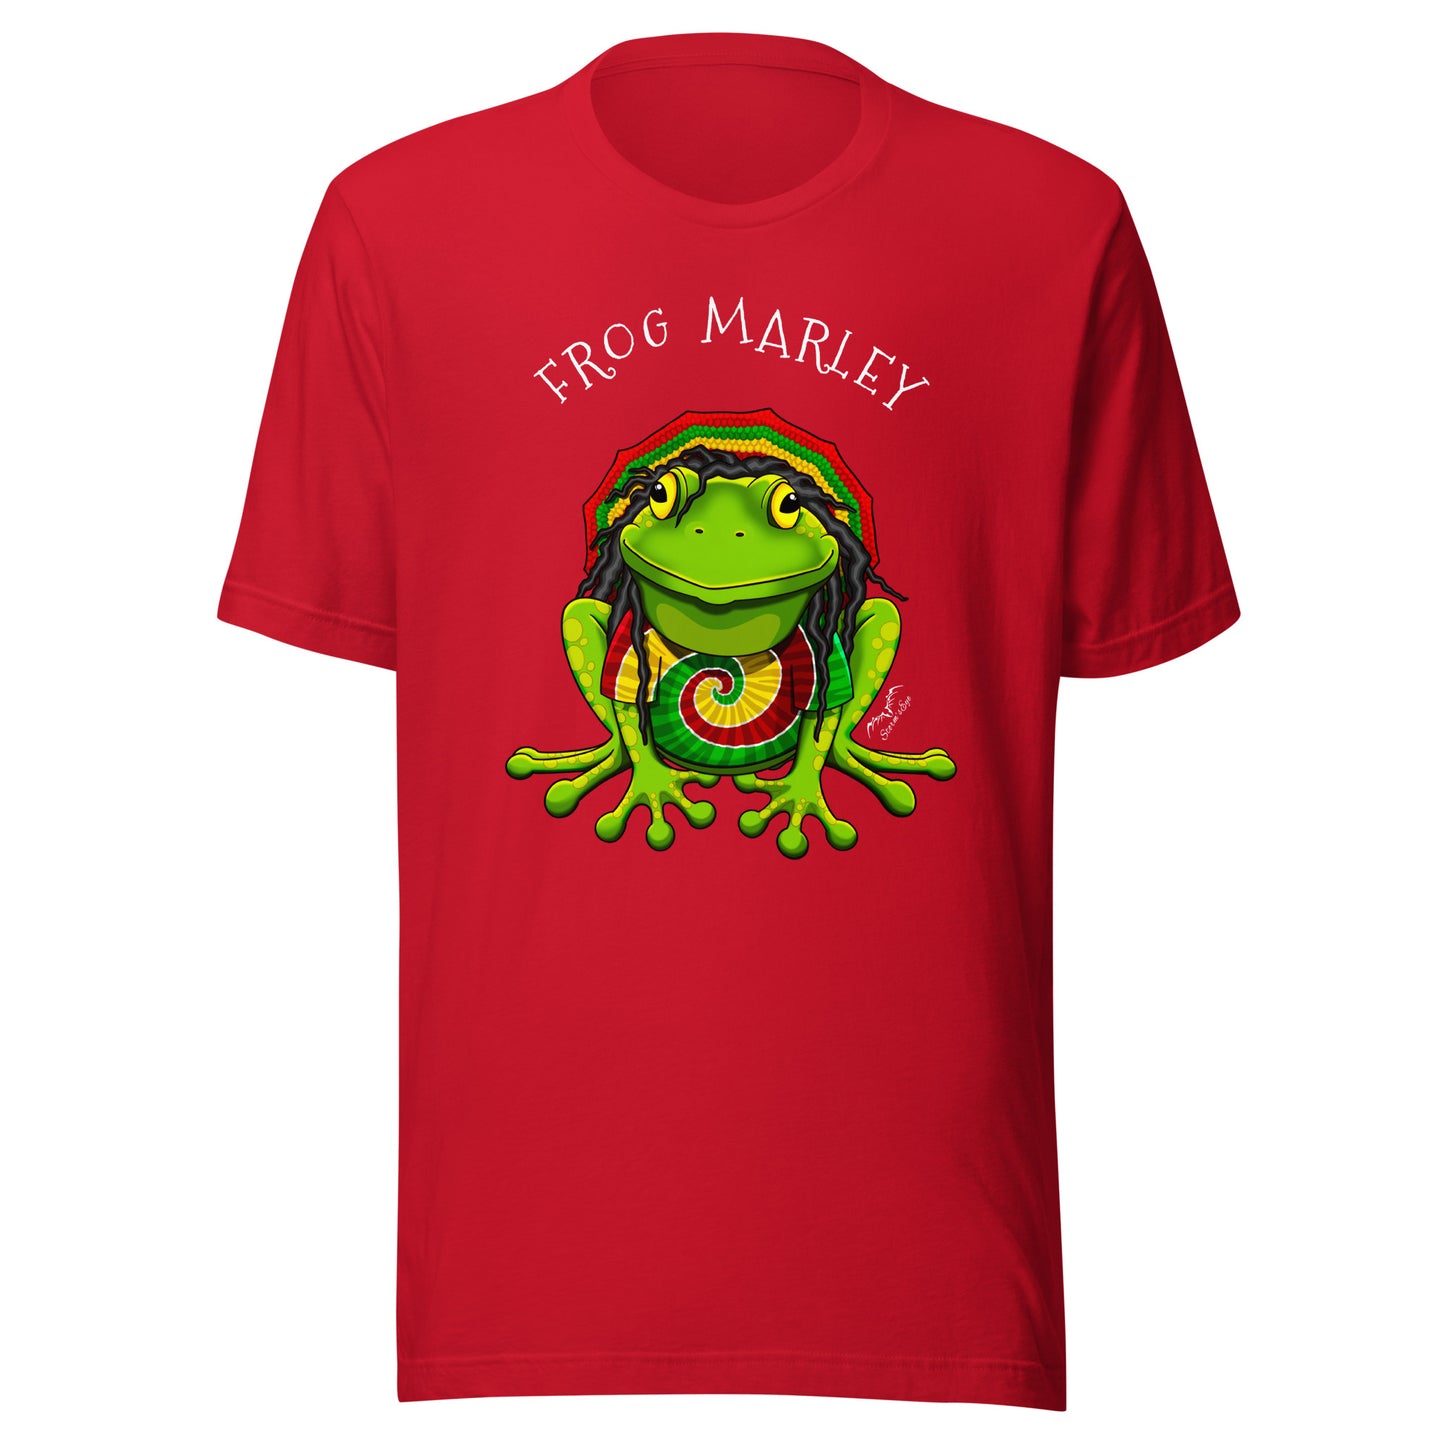 stormseye design frog marley reggae T shirt, flat view bright red